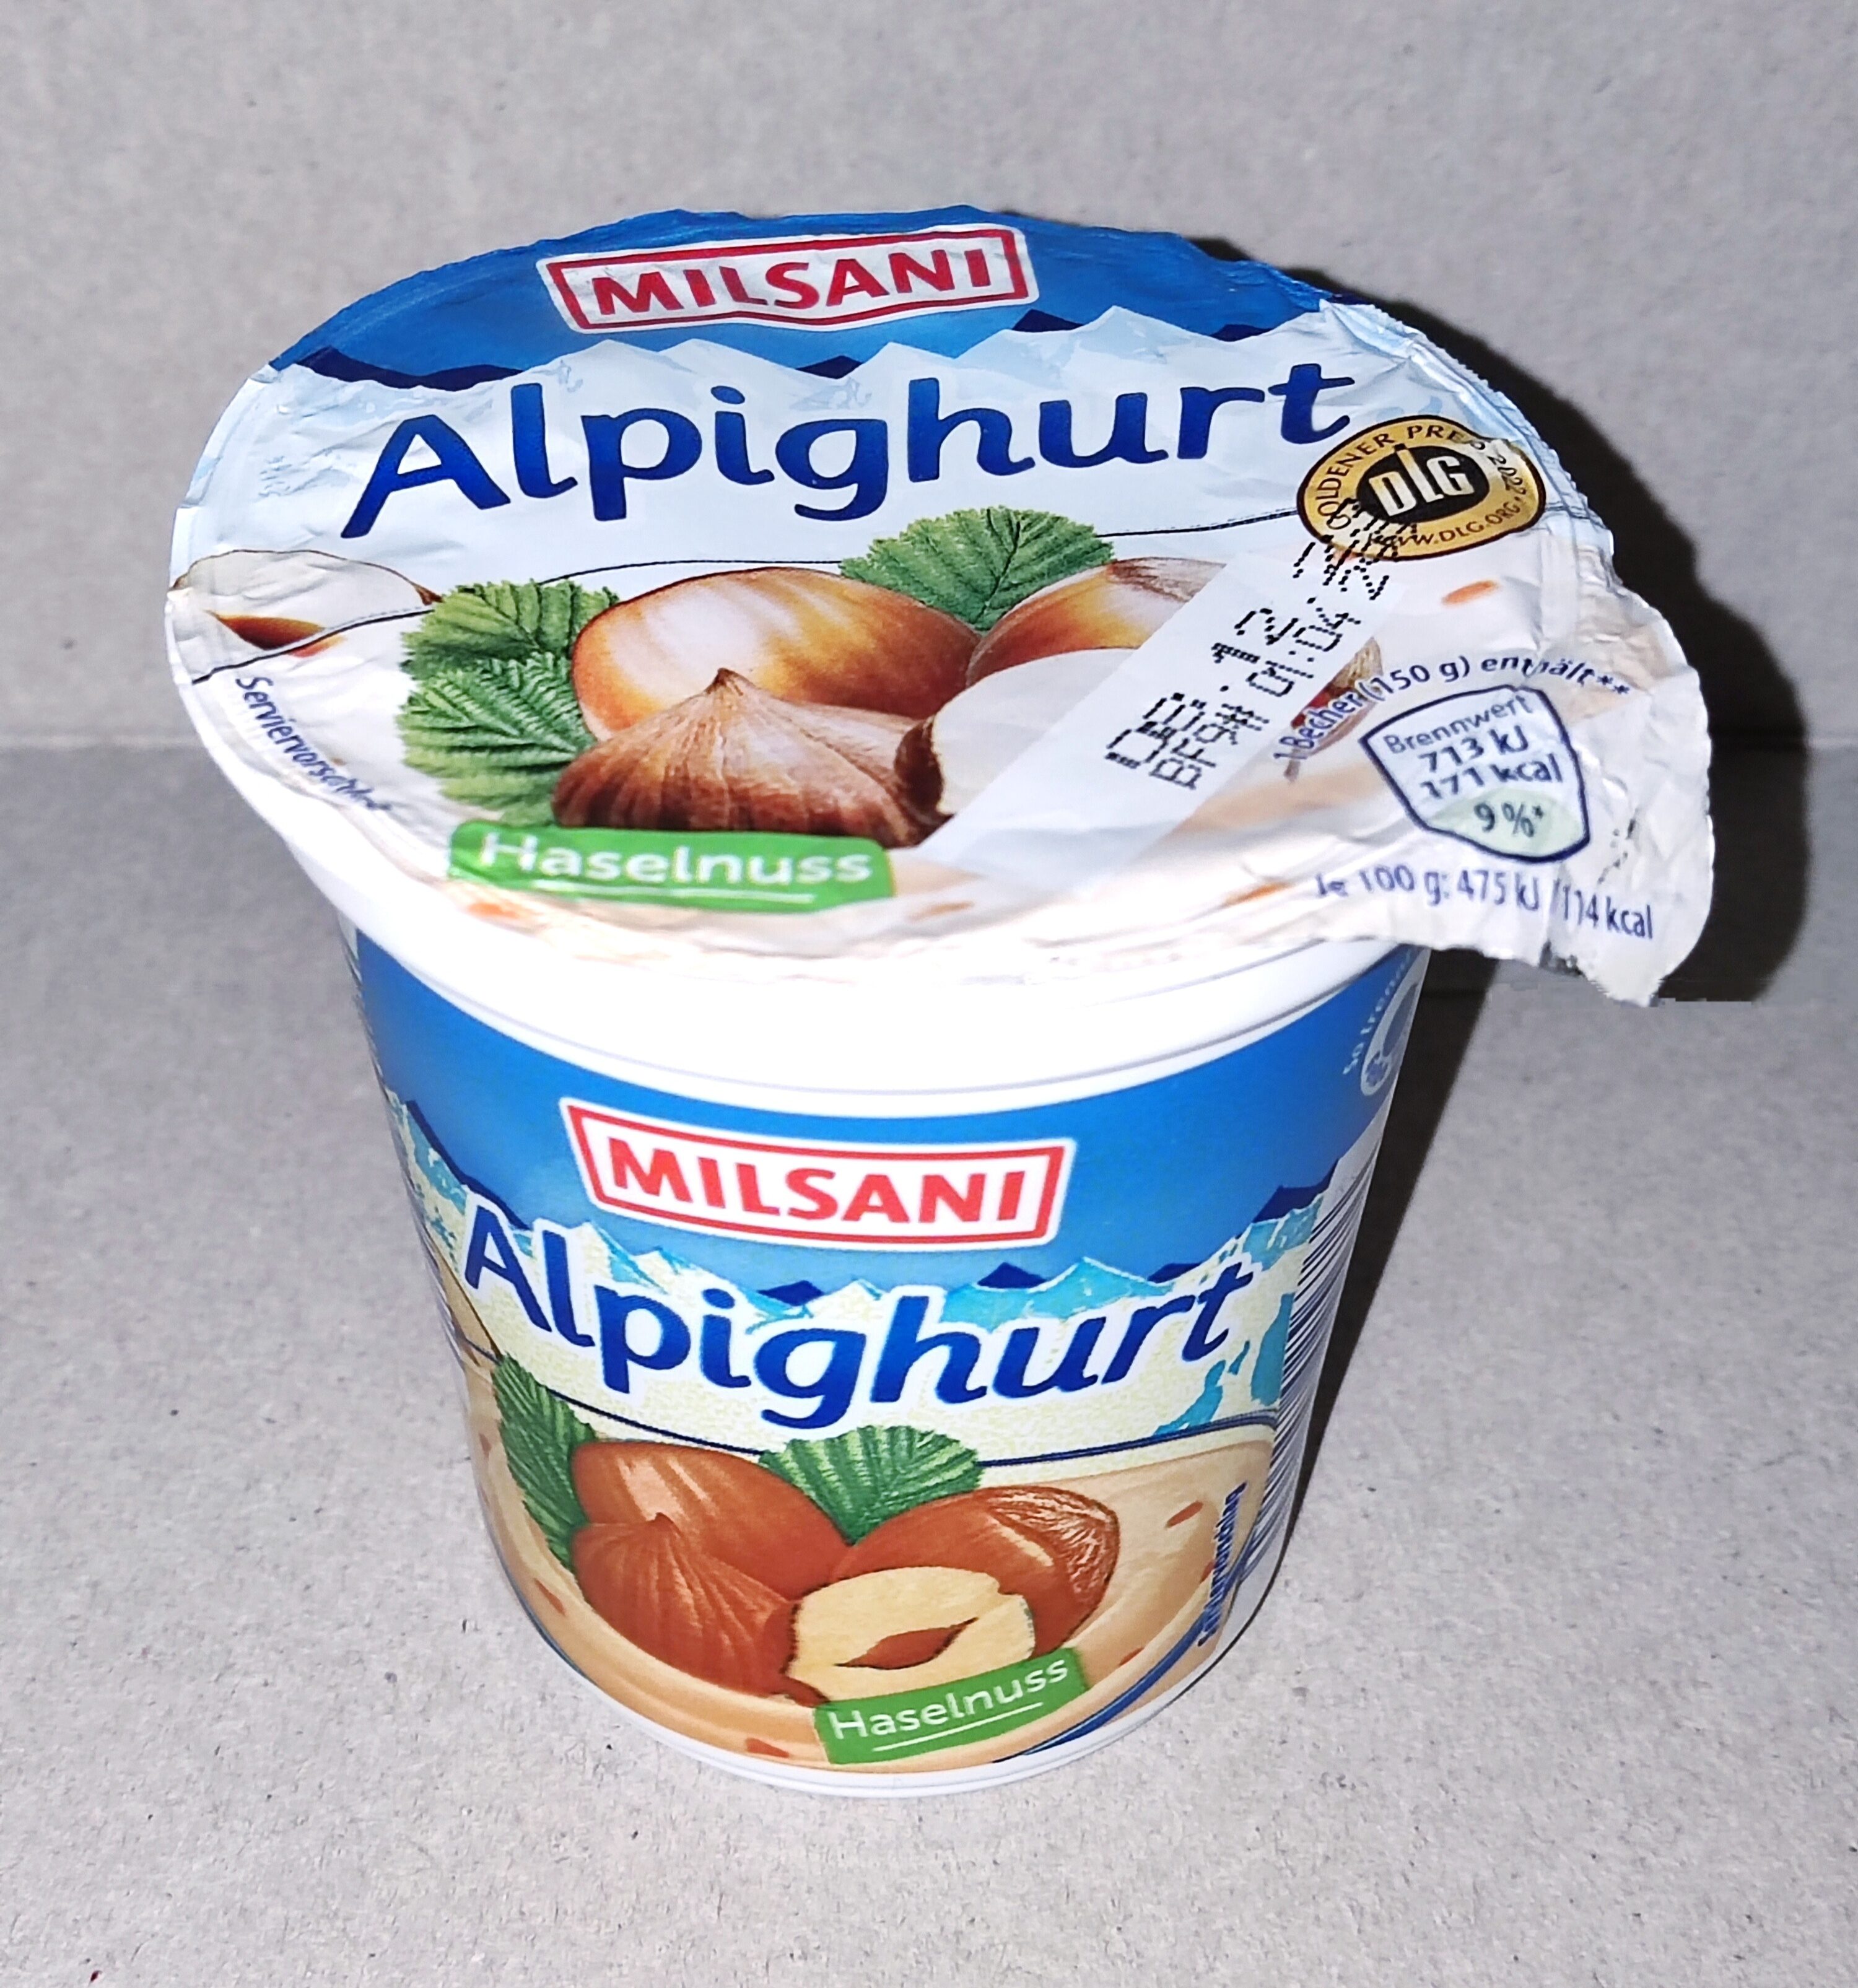 Alpighurt - Haselnuss - Product - de